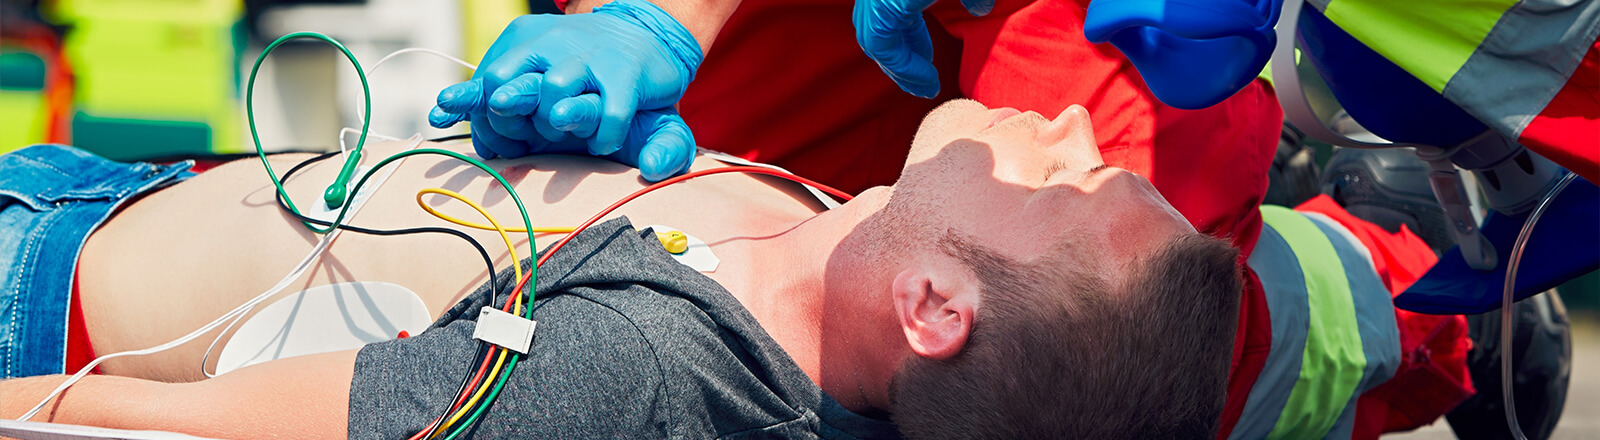 Defibrillatoren / AED